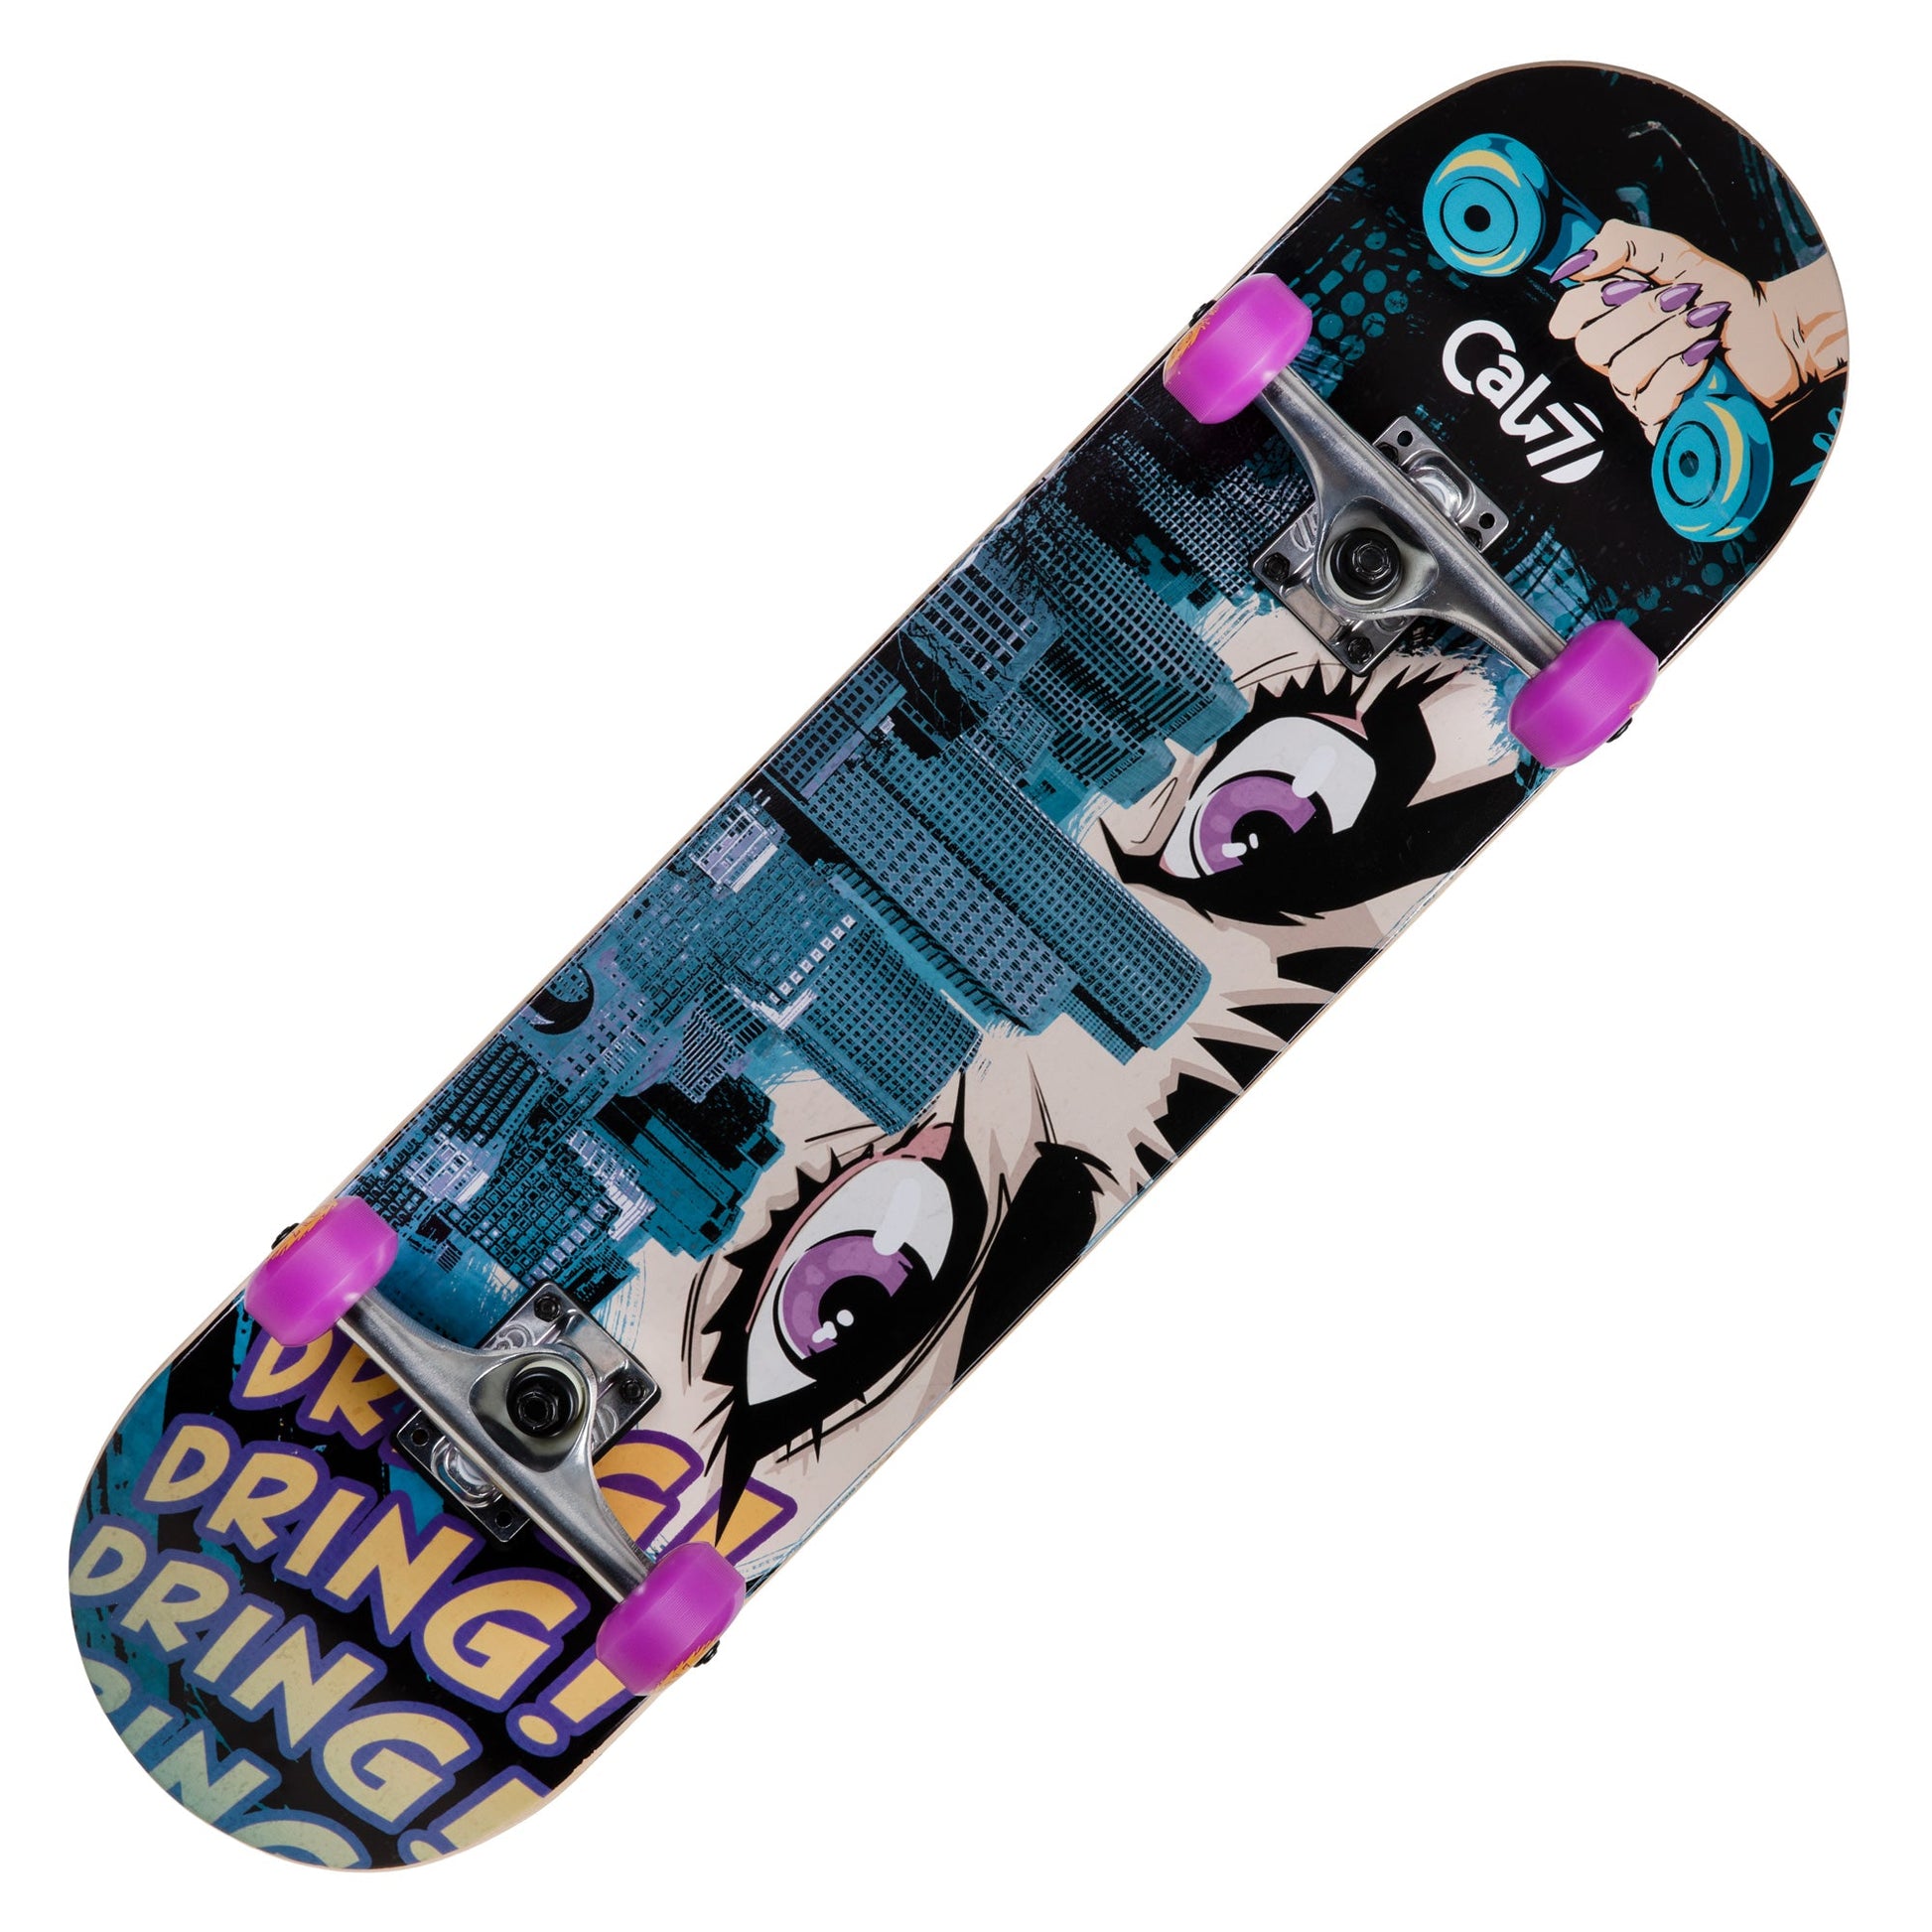 Phone Complete Skateboard